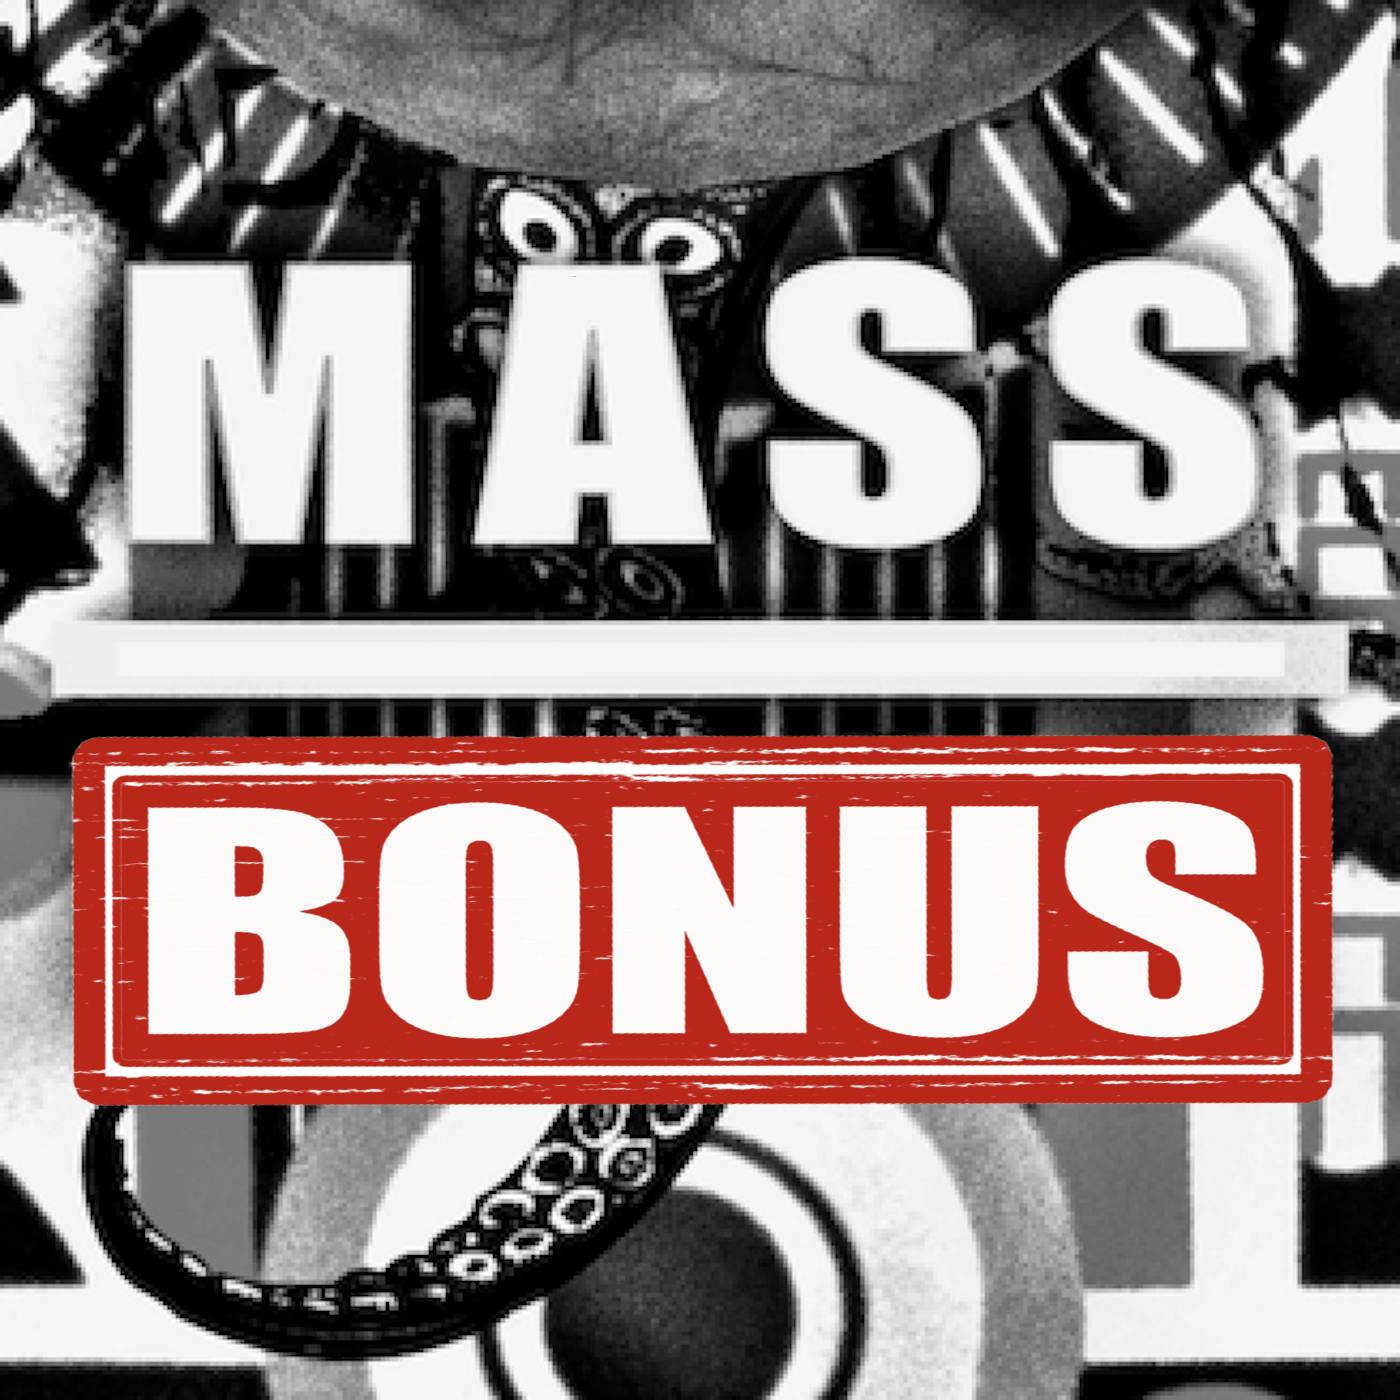 Bonus-wag: MASS MoCA Q&A TIME